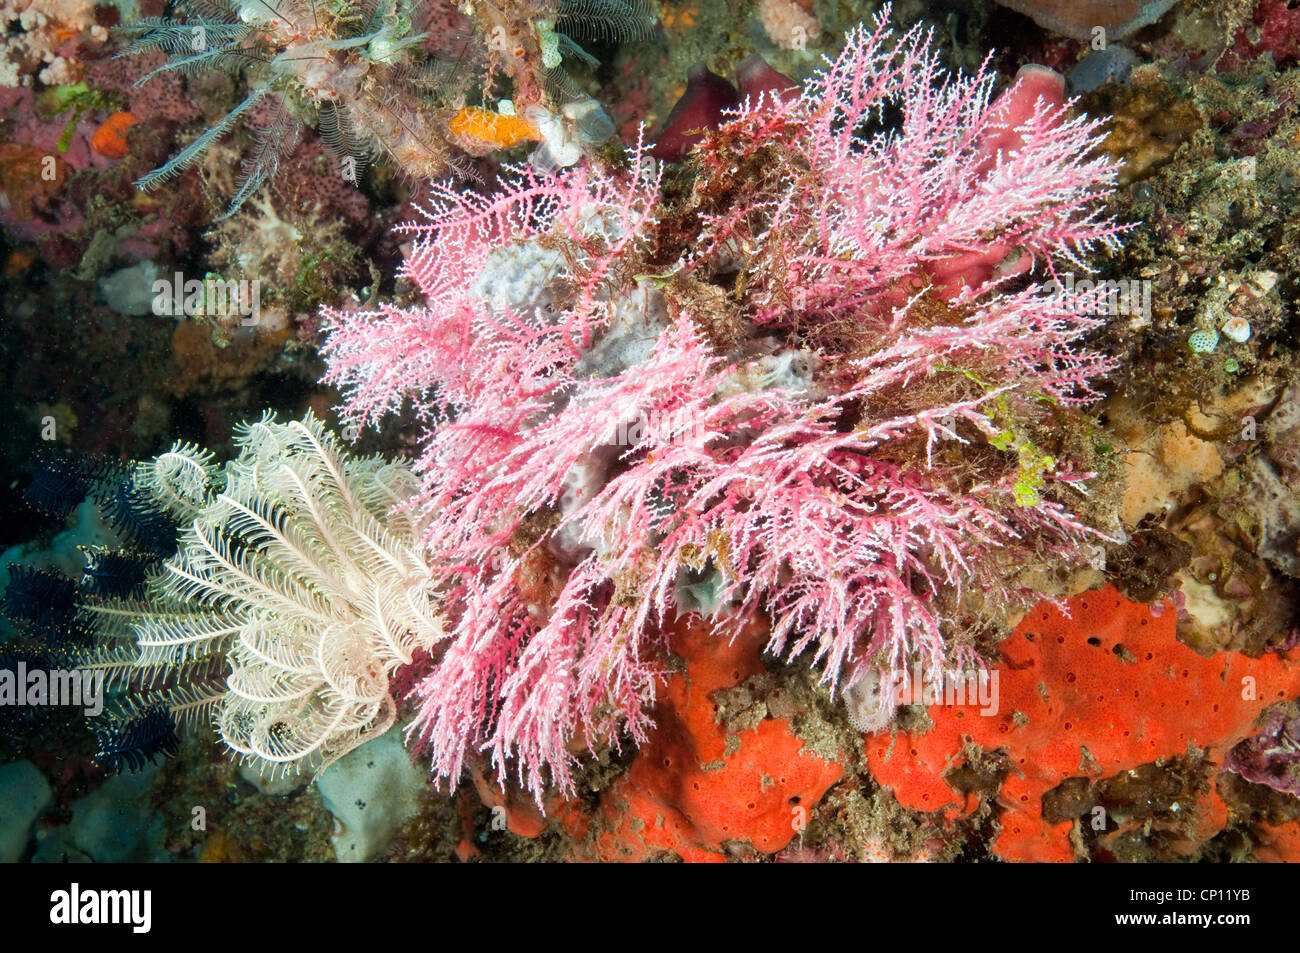 Colorful hydrozoa, Stylaster sp., Sulawesi Indonesia Stock Photo